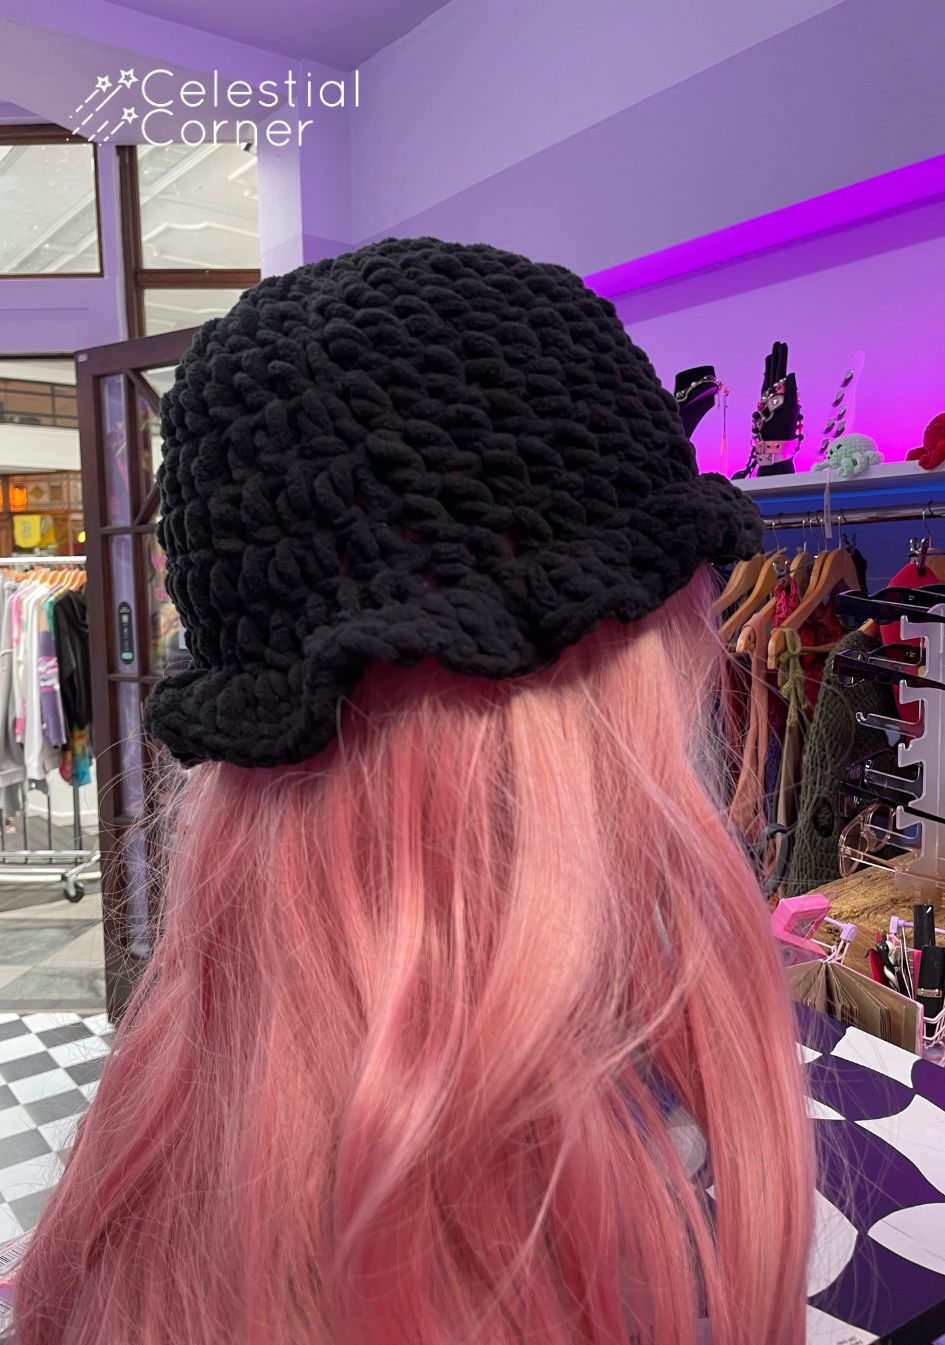 Black Crochet Bucket Hat